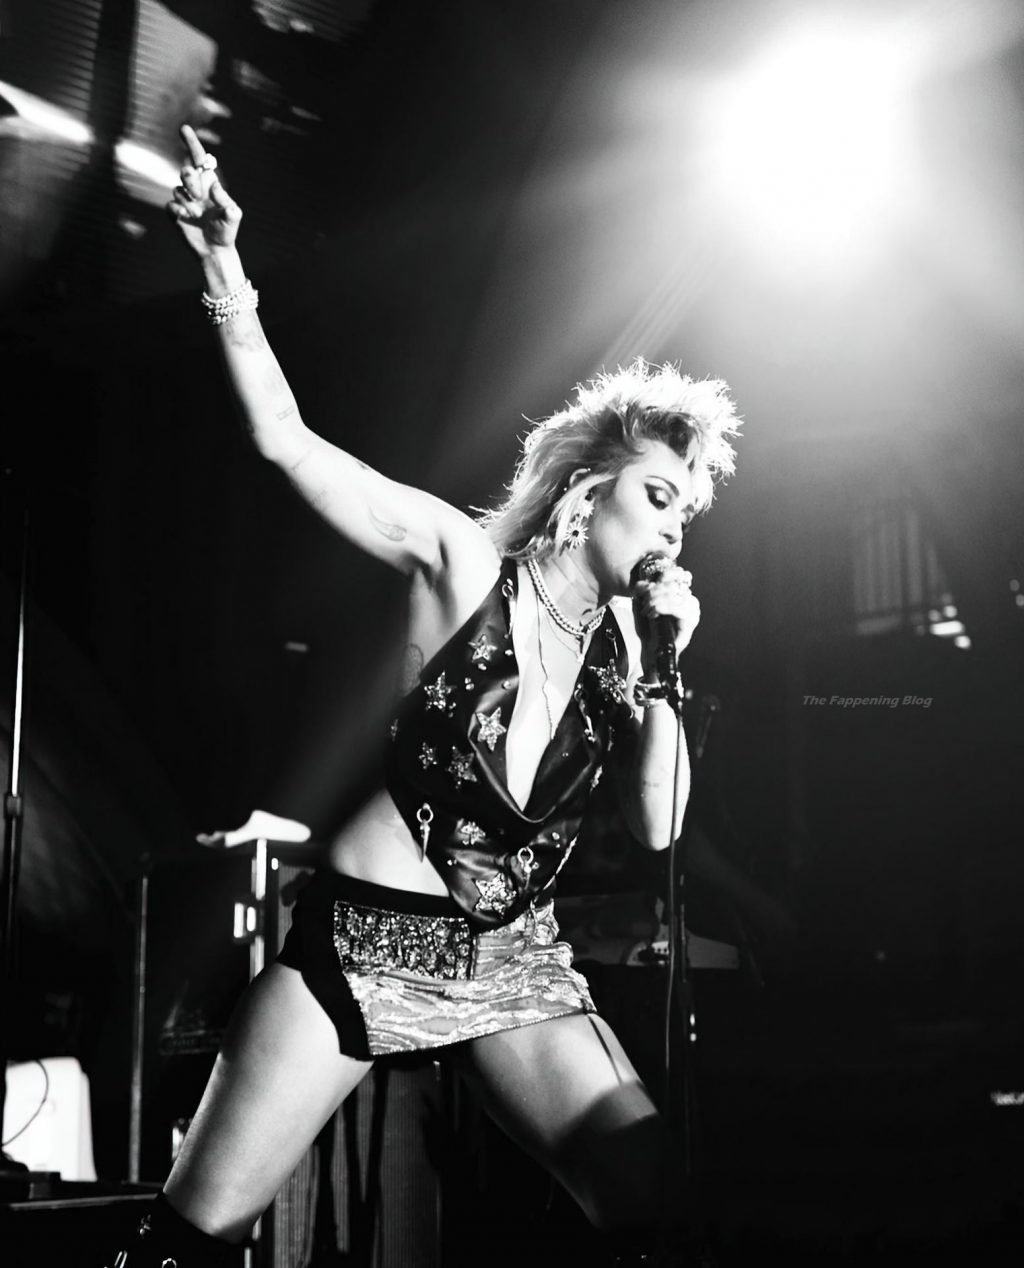 Miley Cyrus Performs at Resorts World Las Vegas (56 Photos + Video)